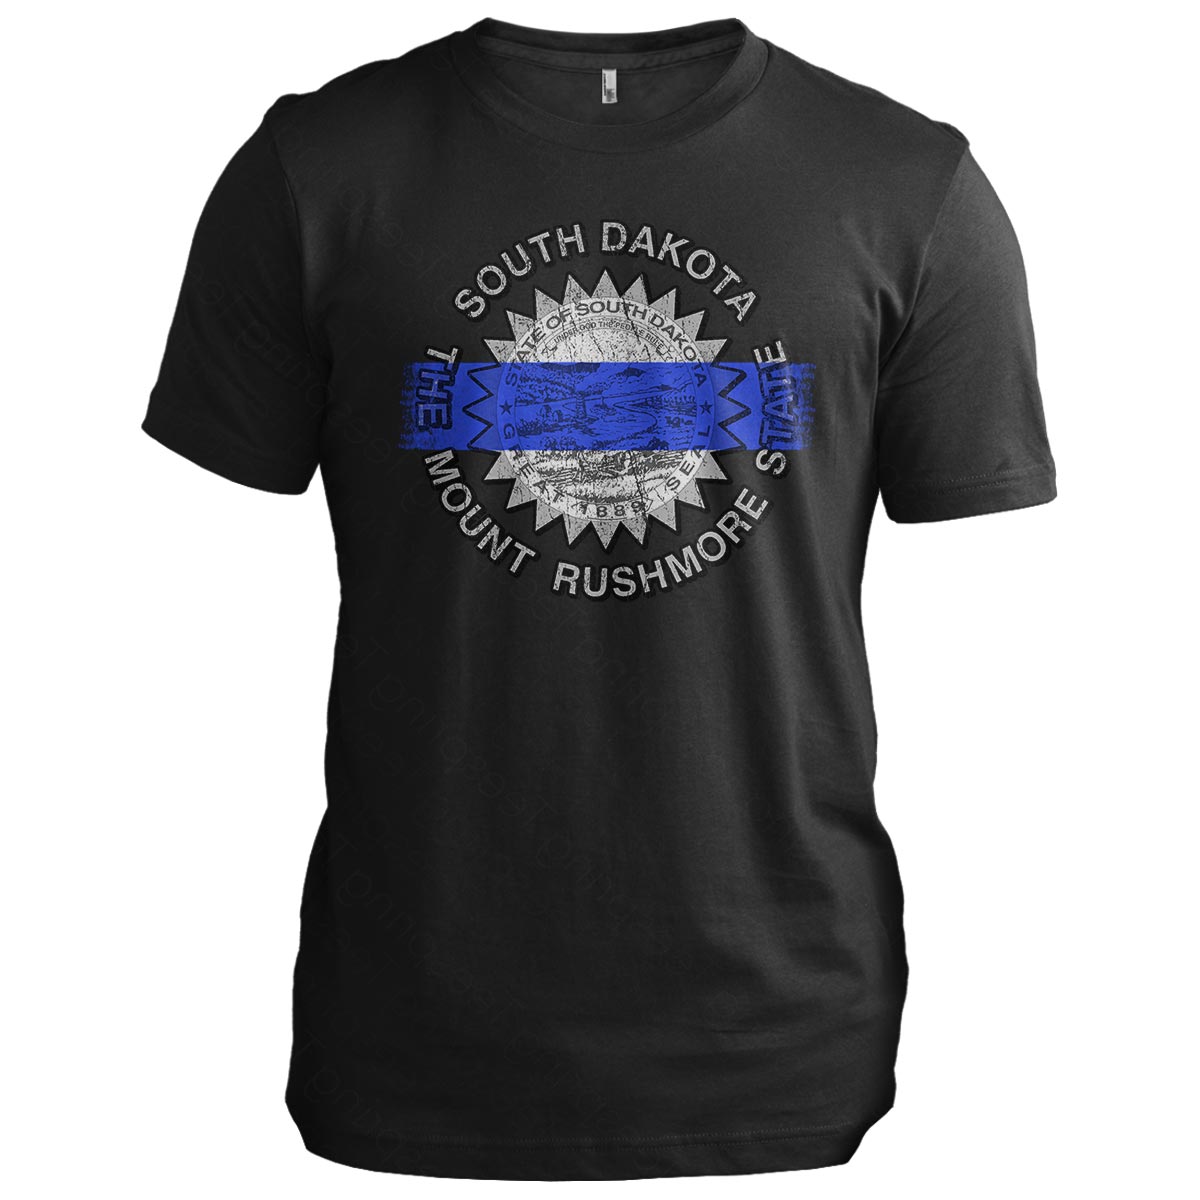 South Dakota Police